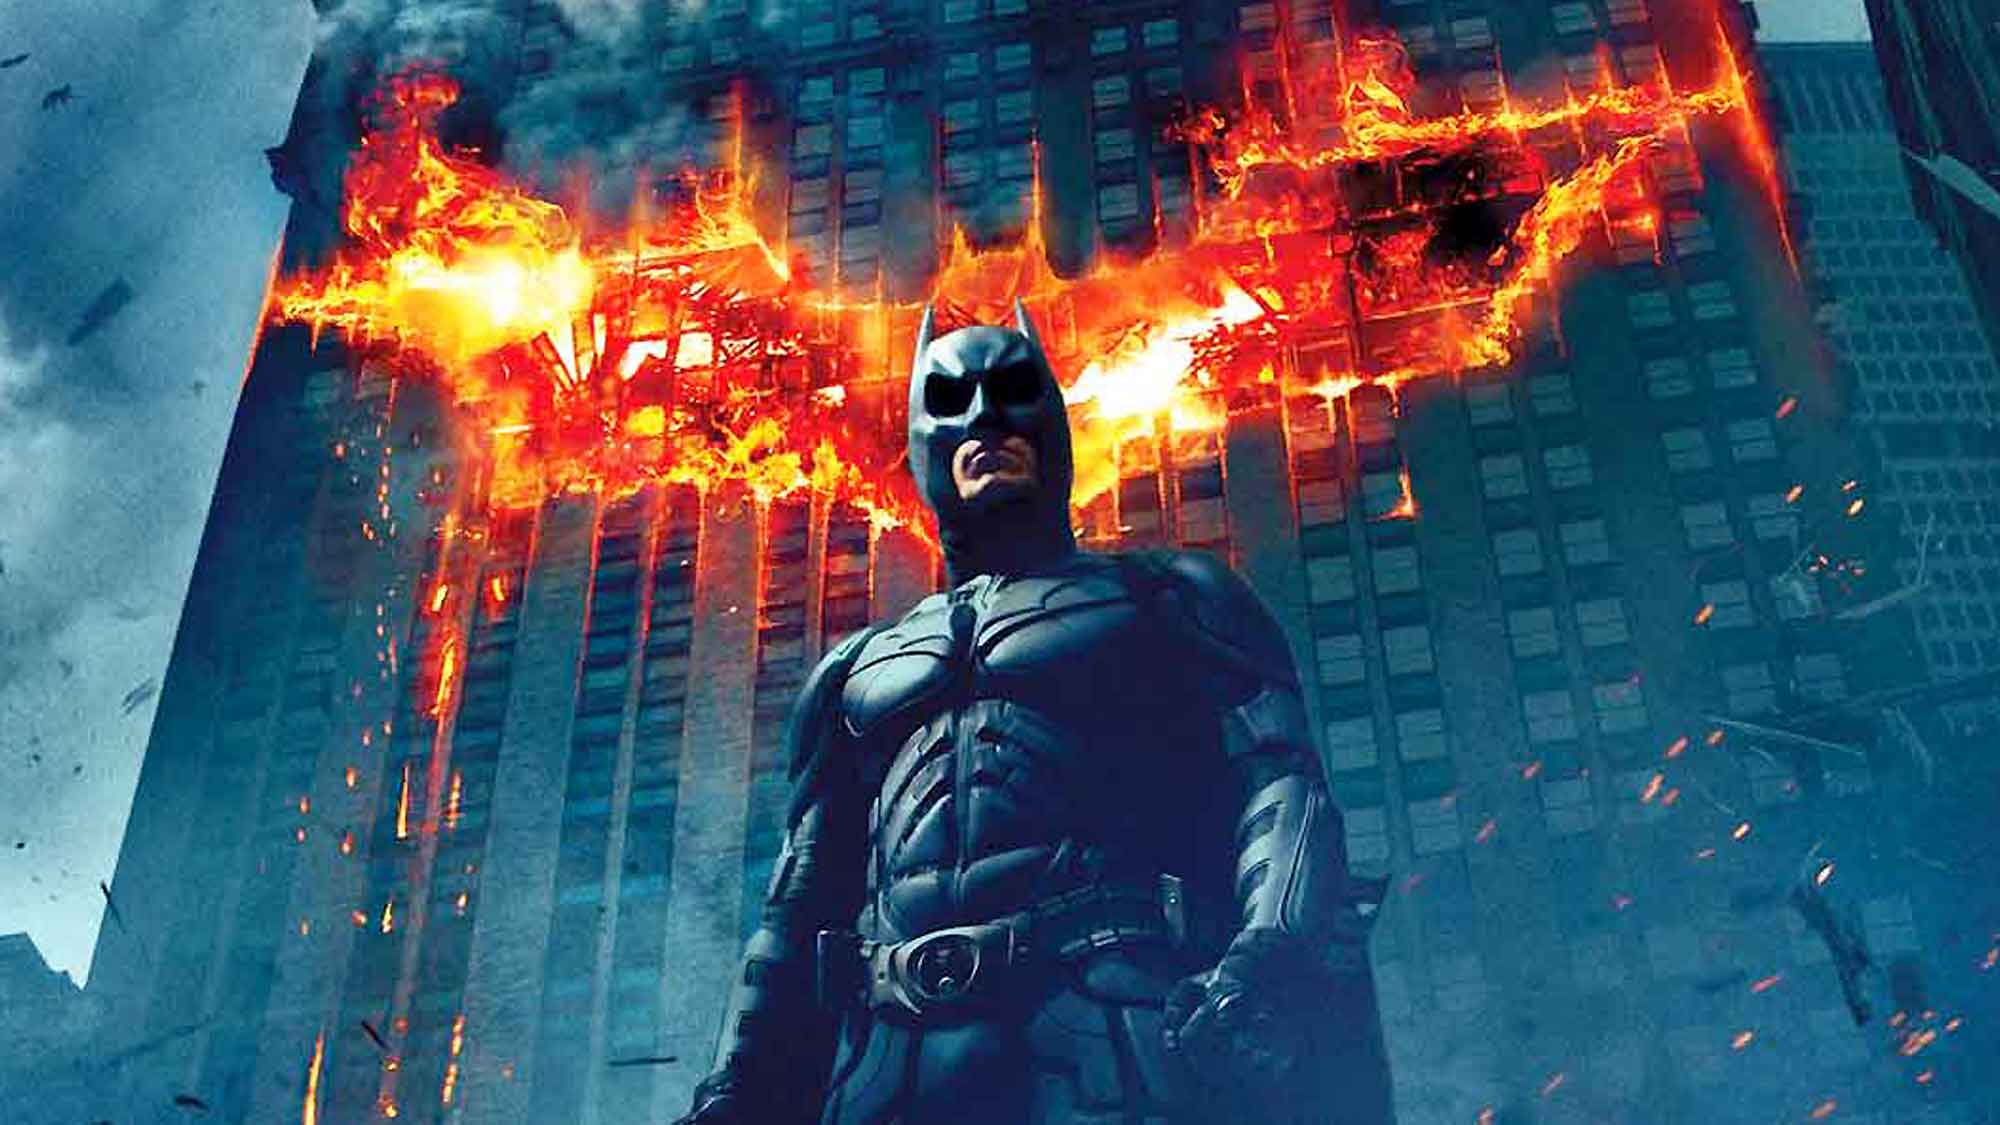 Batman Film 'The Dark Knight' Breaks $500 Million At US Box Office (2008)